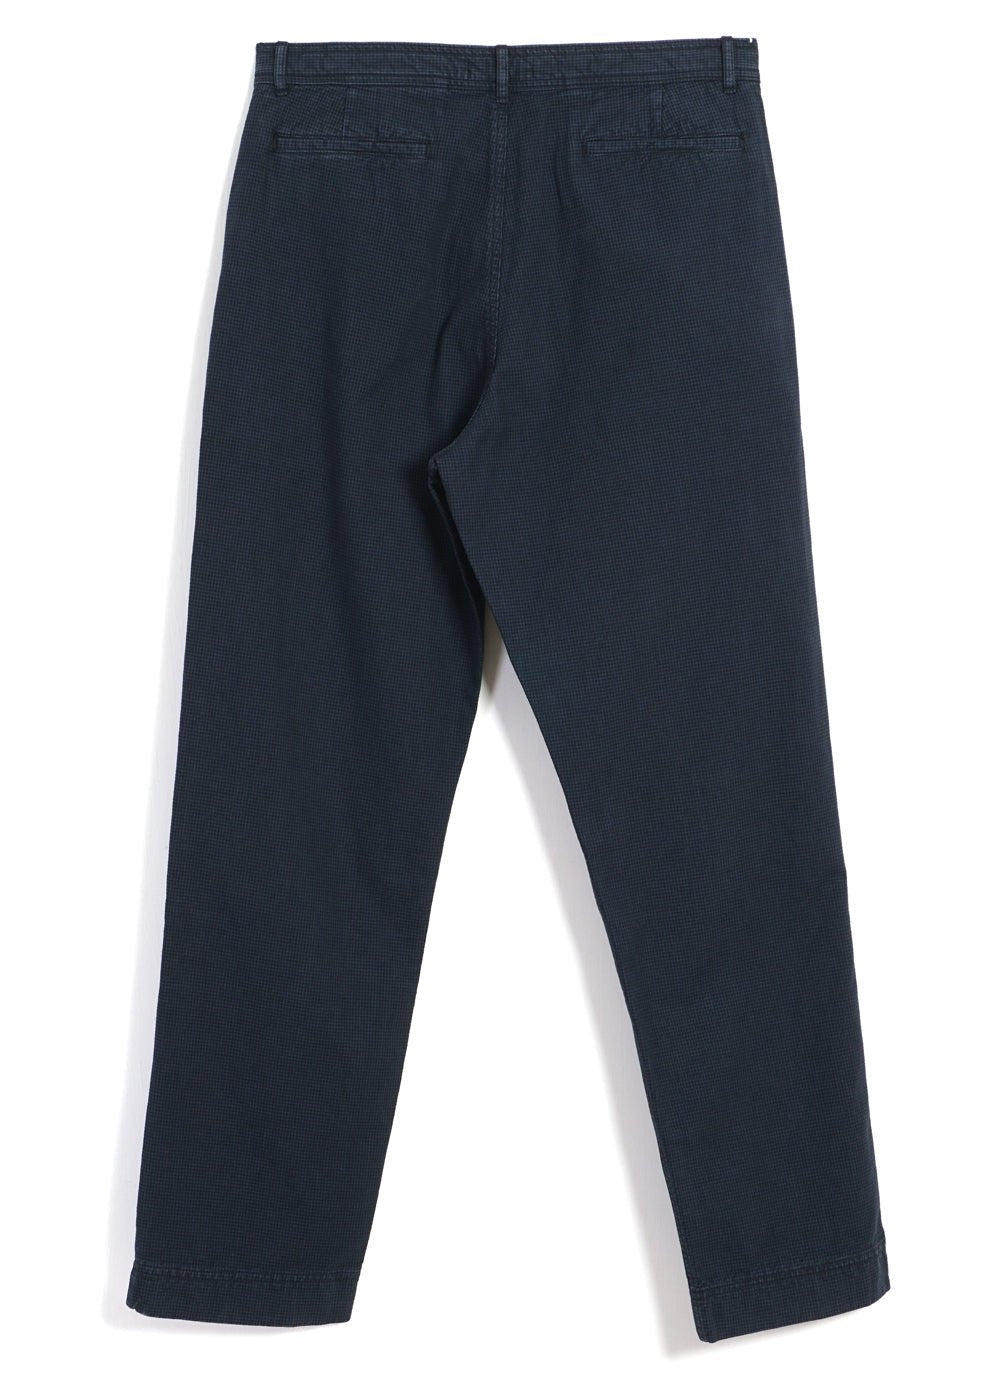 HANSEN GARMENTS - KEN | Wide Cut Work Trousers | Black Navy - HANSEN Garments